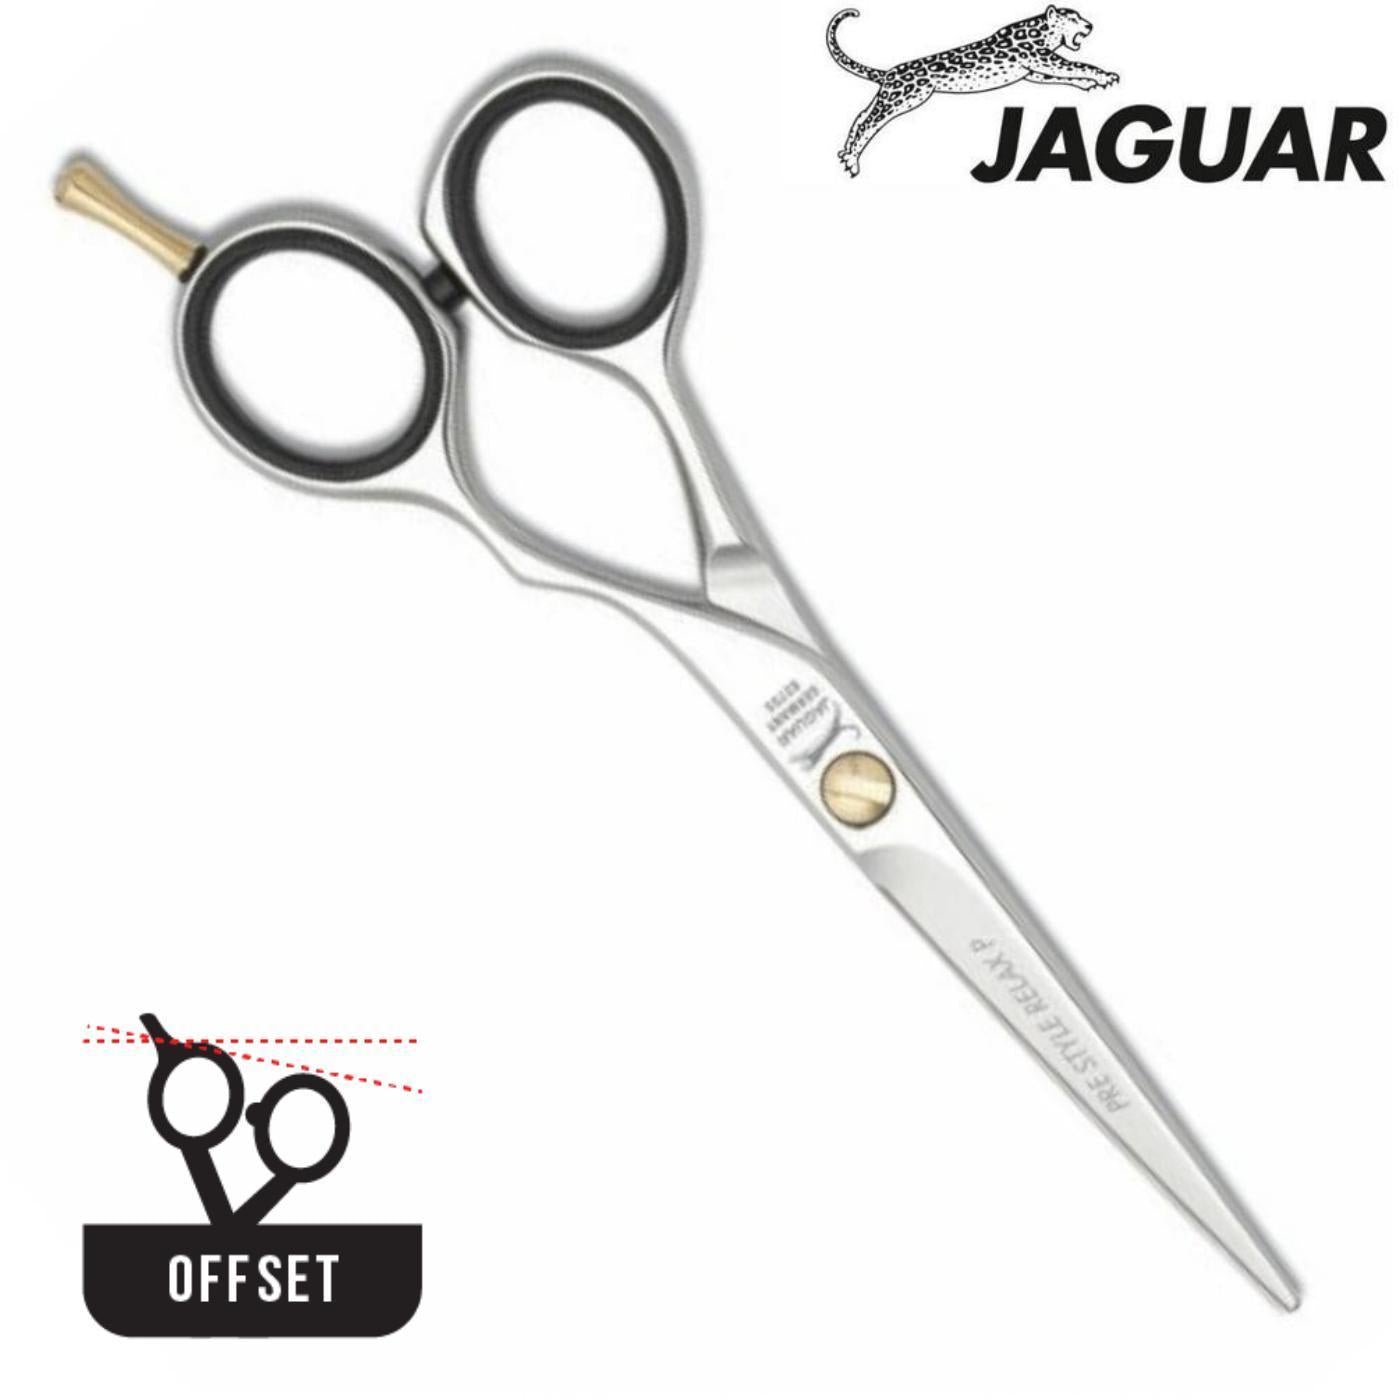 Jaguar Pre Relax Hair Cutting Scissors Japan Scissors USA